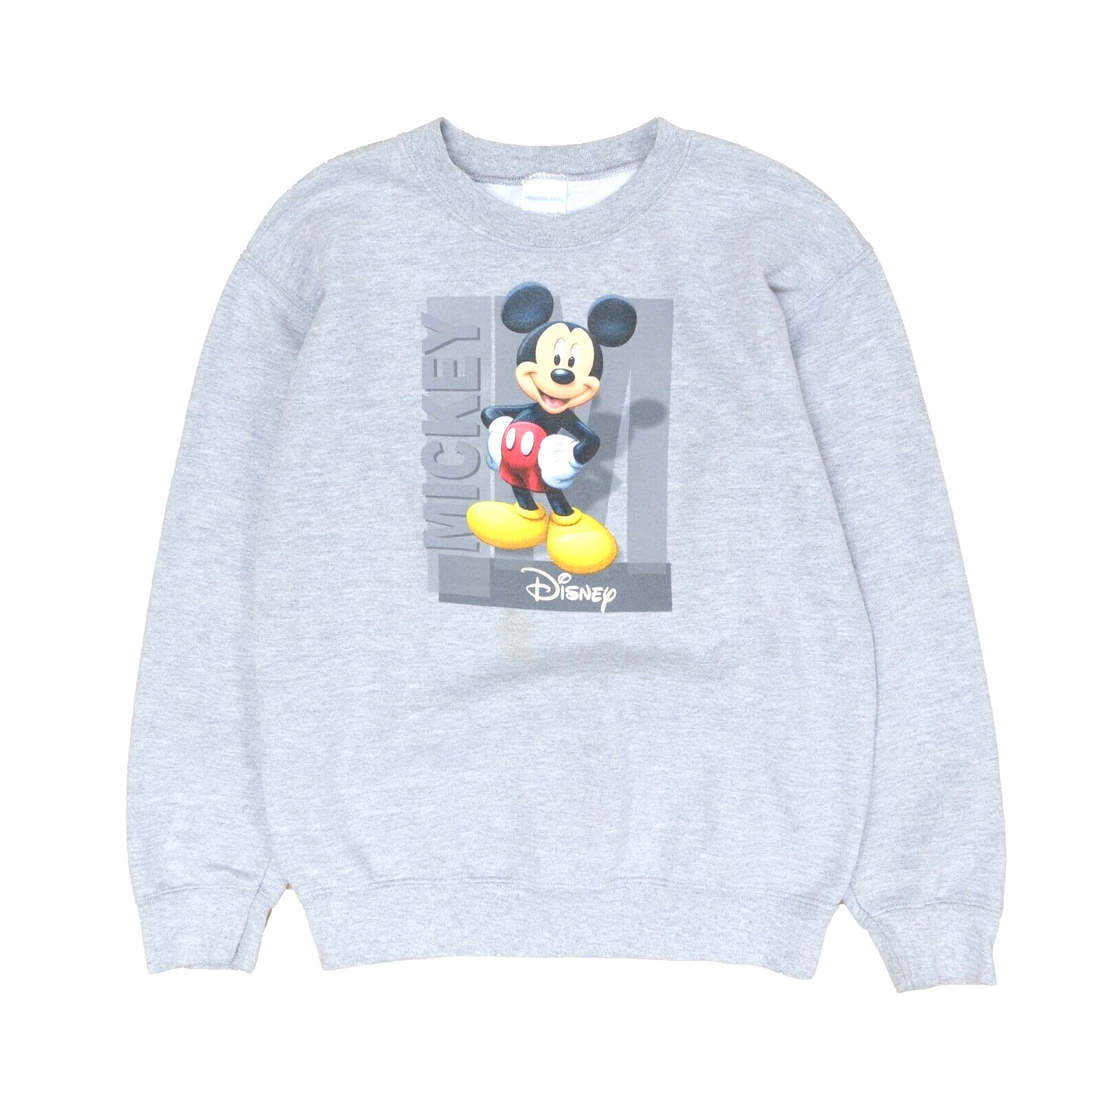 Vintage Mickey Mouse Disney Sweatshirt Crewneck Size Medium Gray